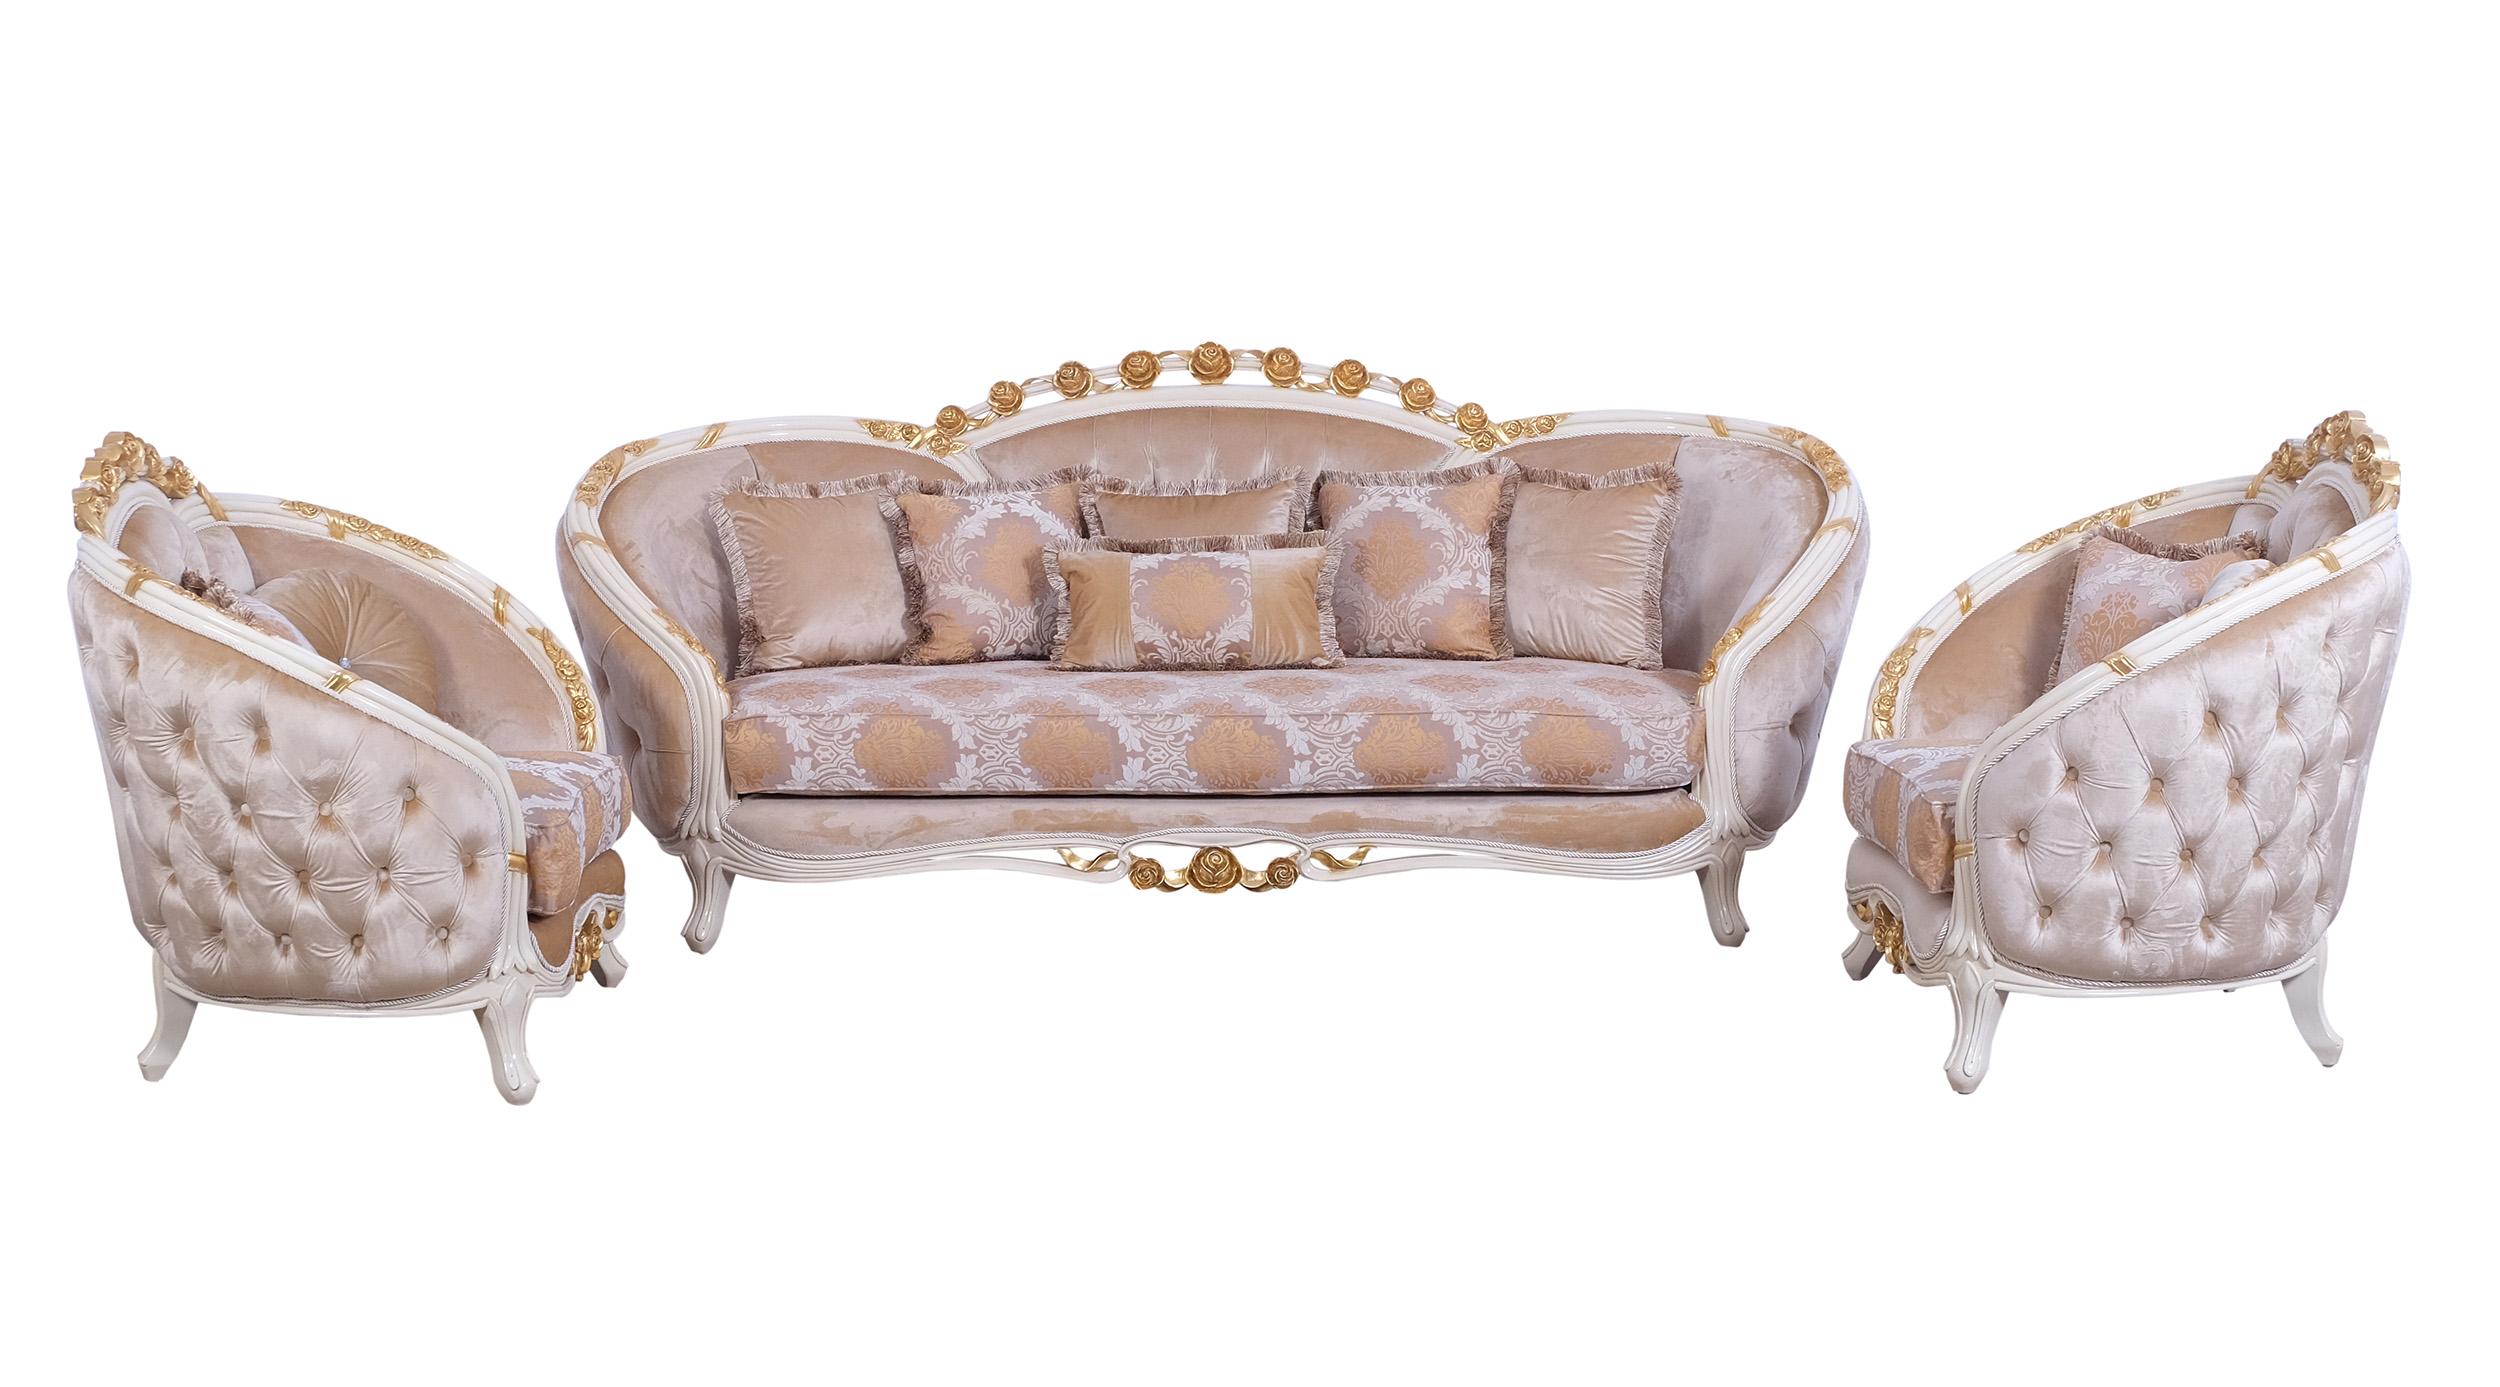 

    
Luxury Beige & Gold Wood Trim VALENTINE Sofa Set 3Pcs EUROPEAN FURNITURE Classic
